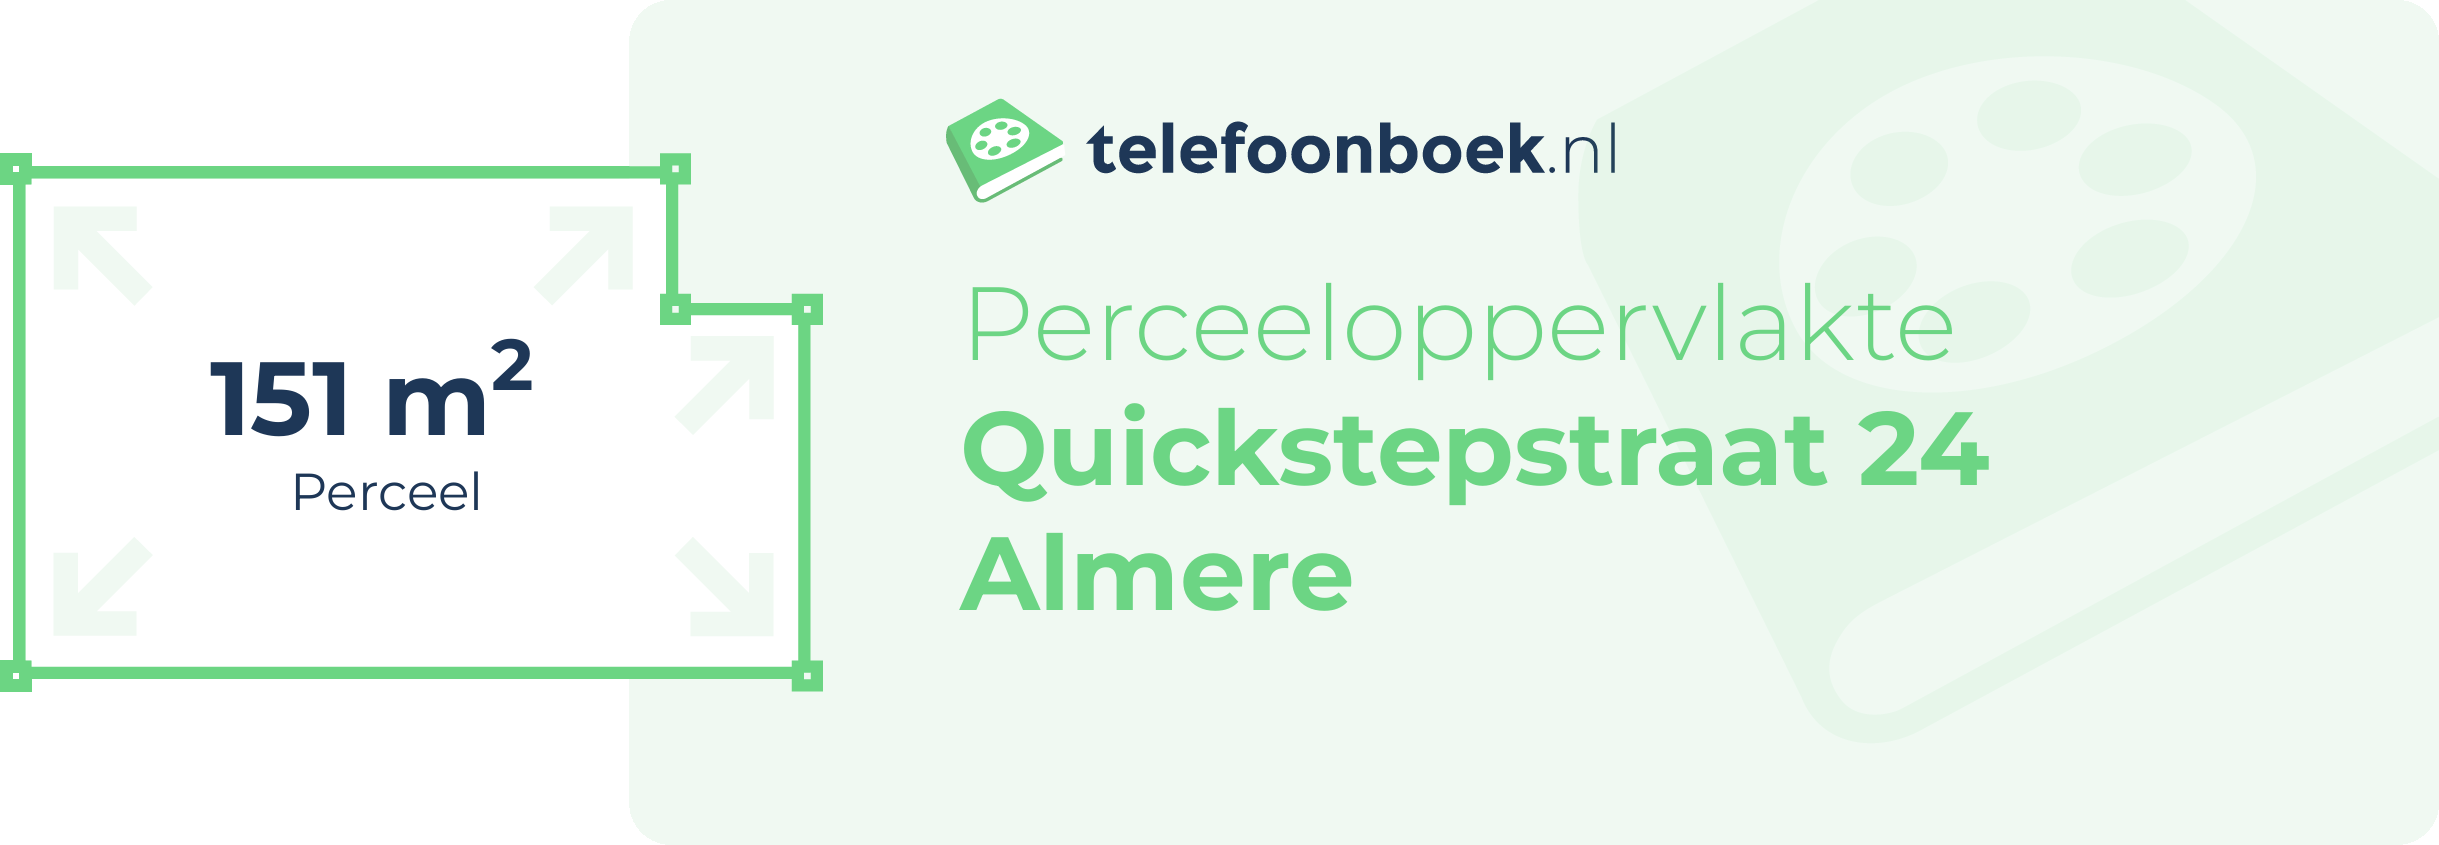 Perceeloppervlakte Quickstepstraat 24 Almere